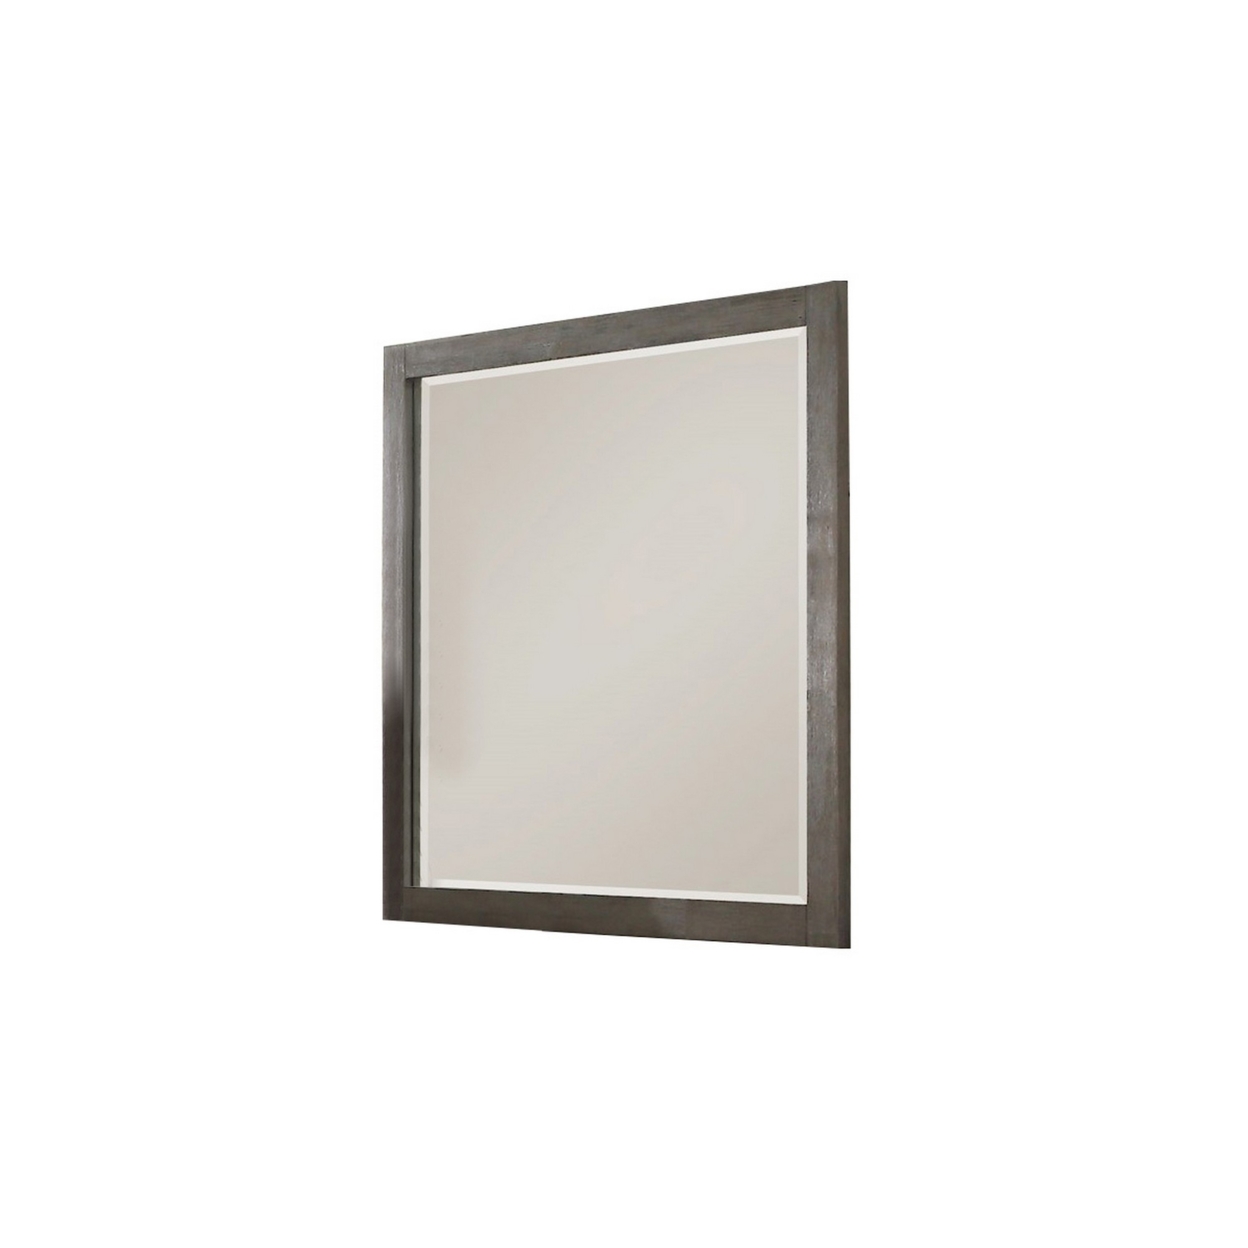 Contemporary Wooden Frame Dresser Mirror With Natural Grain Details, Gray- Saltoro Sherpi